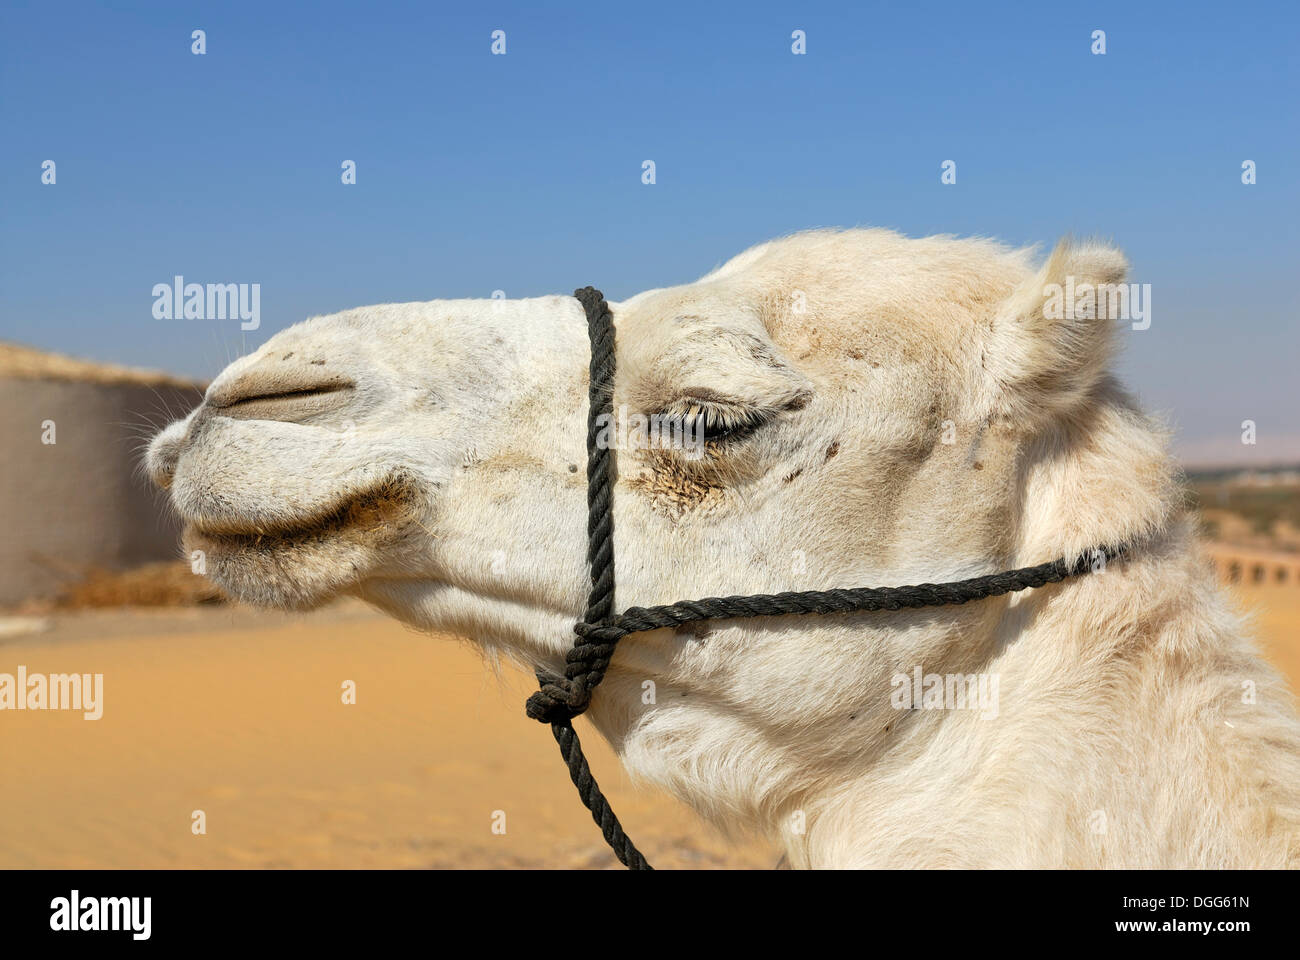 White Arabian camel, dromedary (Camelus dromedarius), portrait, Dakhla Oasis, Libyan Desert, also known as Western Desert Stock Photo